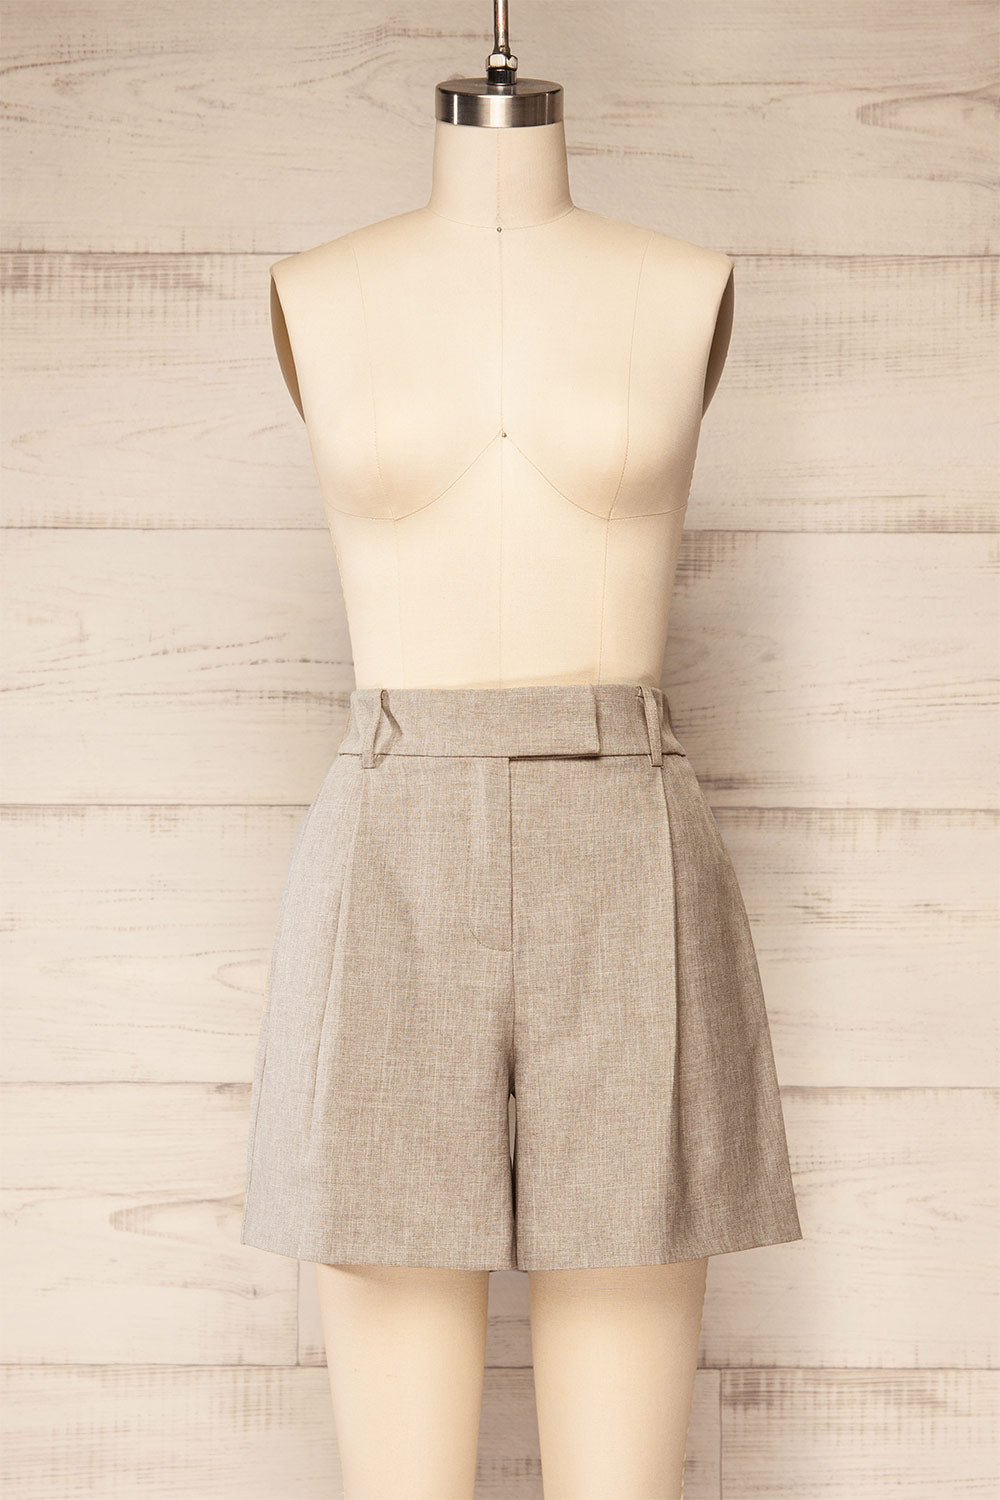 Kunga Grey High-Waisted Shorts w/ Pockets | La petite garçonne front view